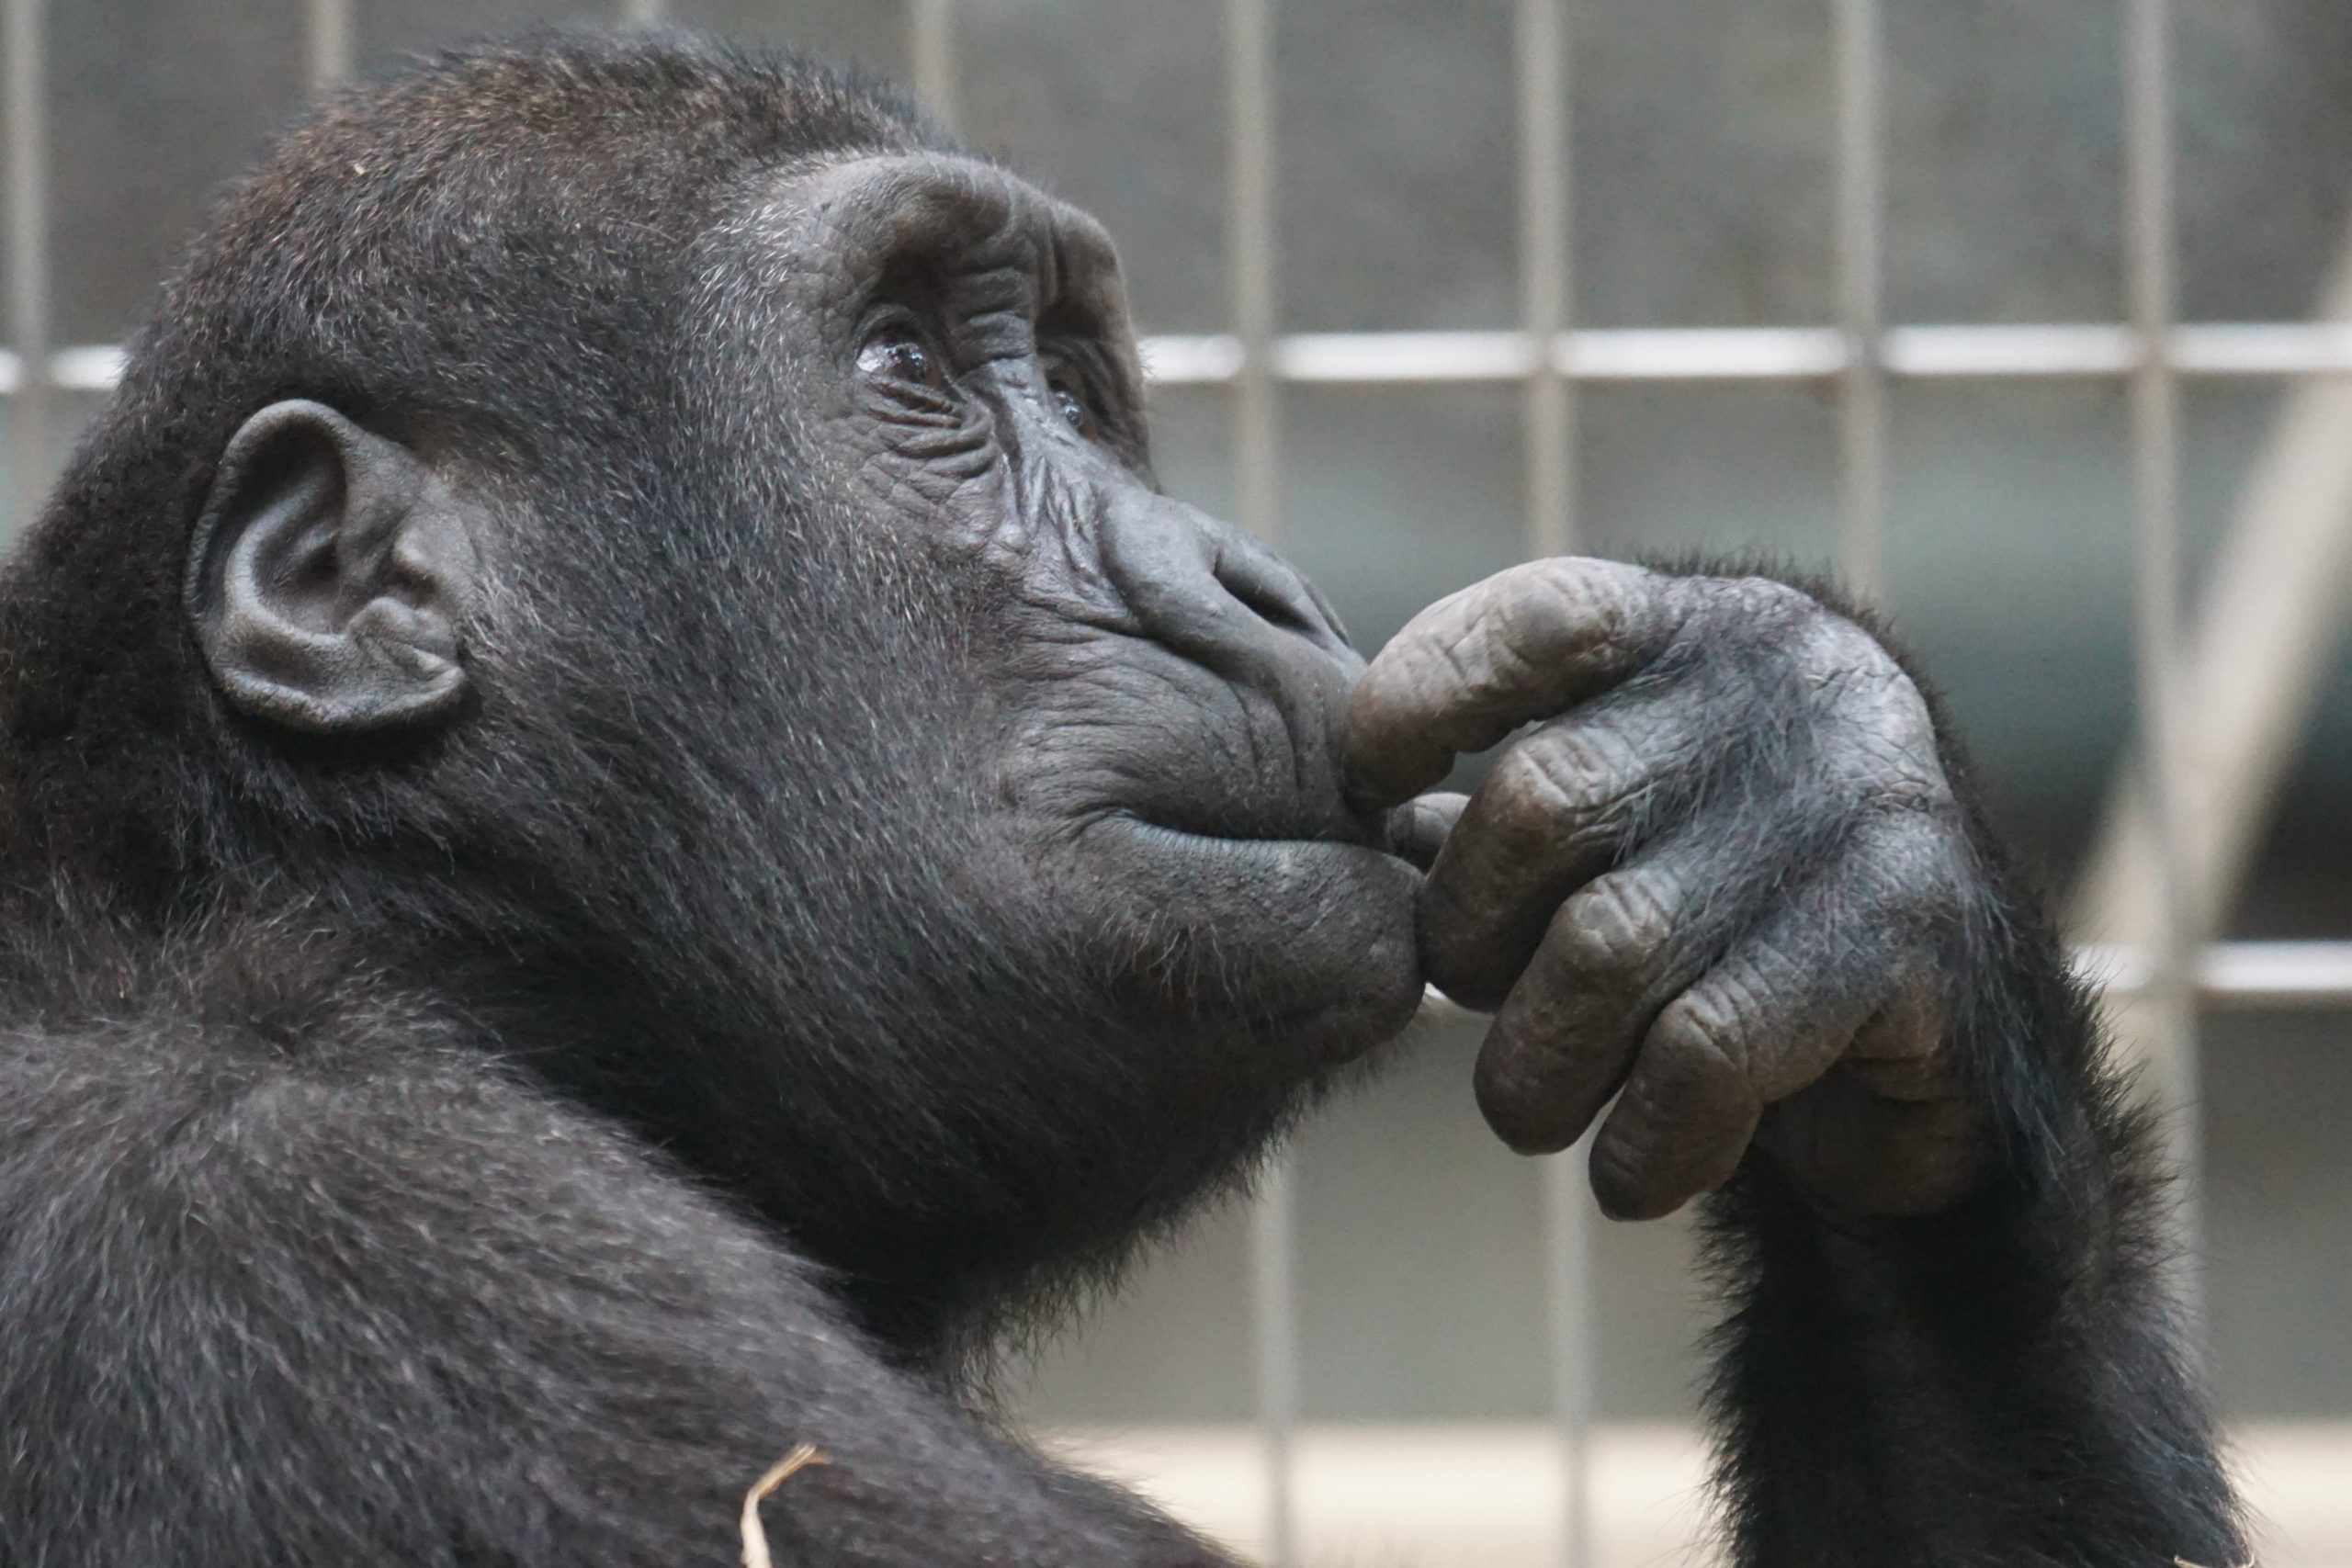 Descubren sacrificio de 27 monos del centro de investigación de la Nasa en 2019